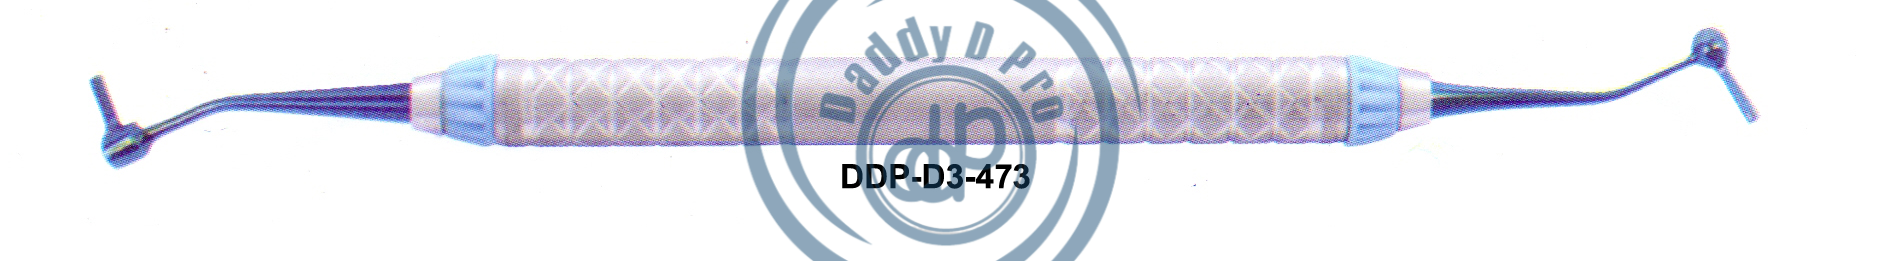 images/DDP-D3-473.png